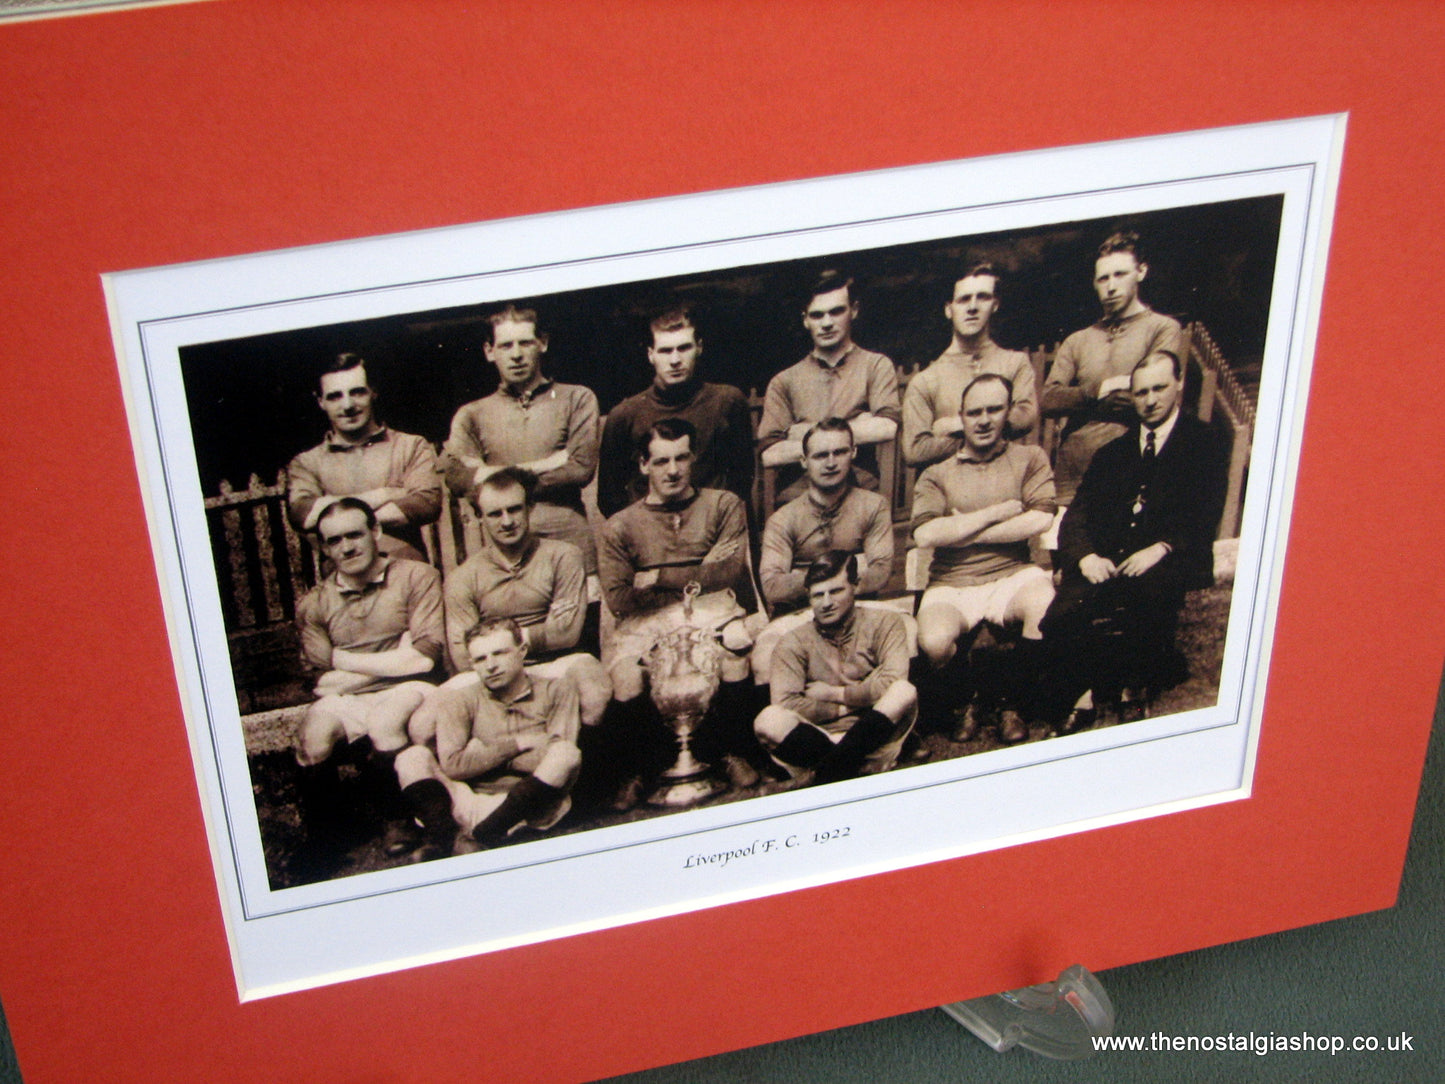 Liverpool F.C. 1922. Team Photo in Mount.